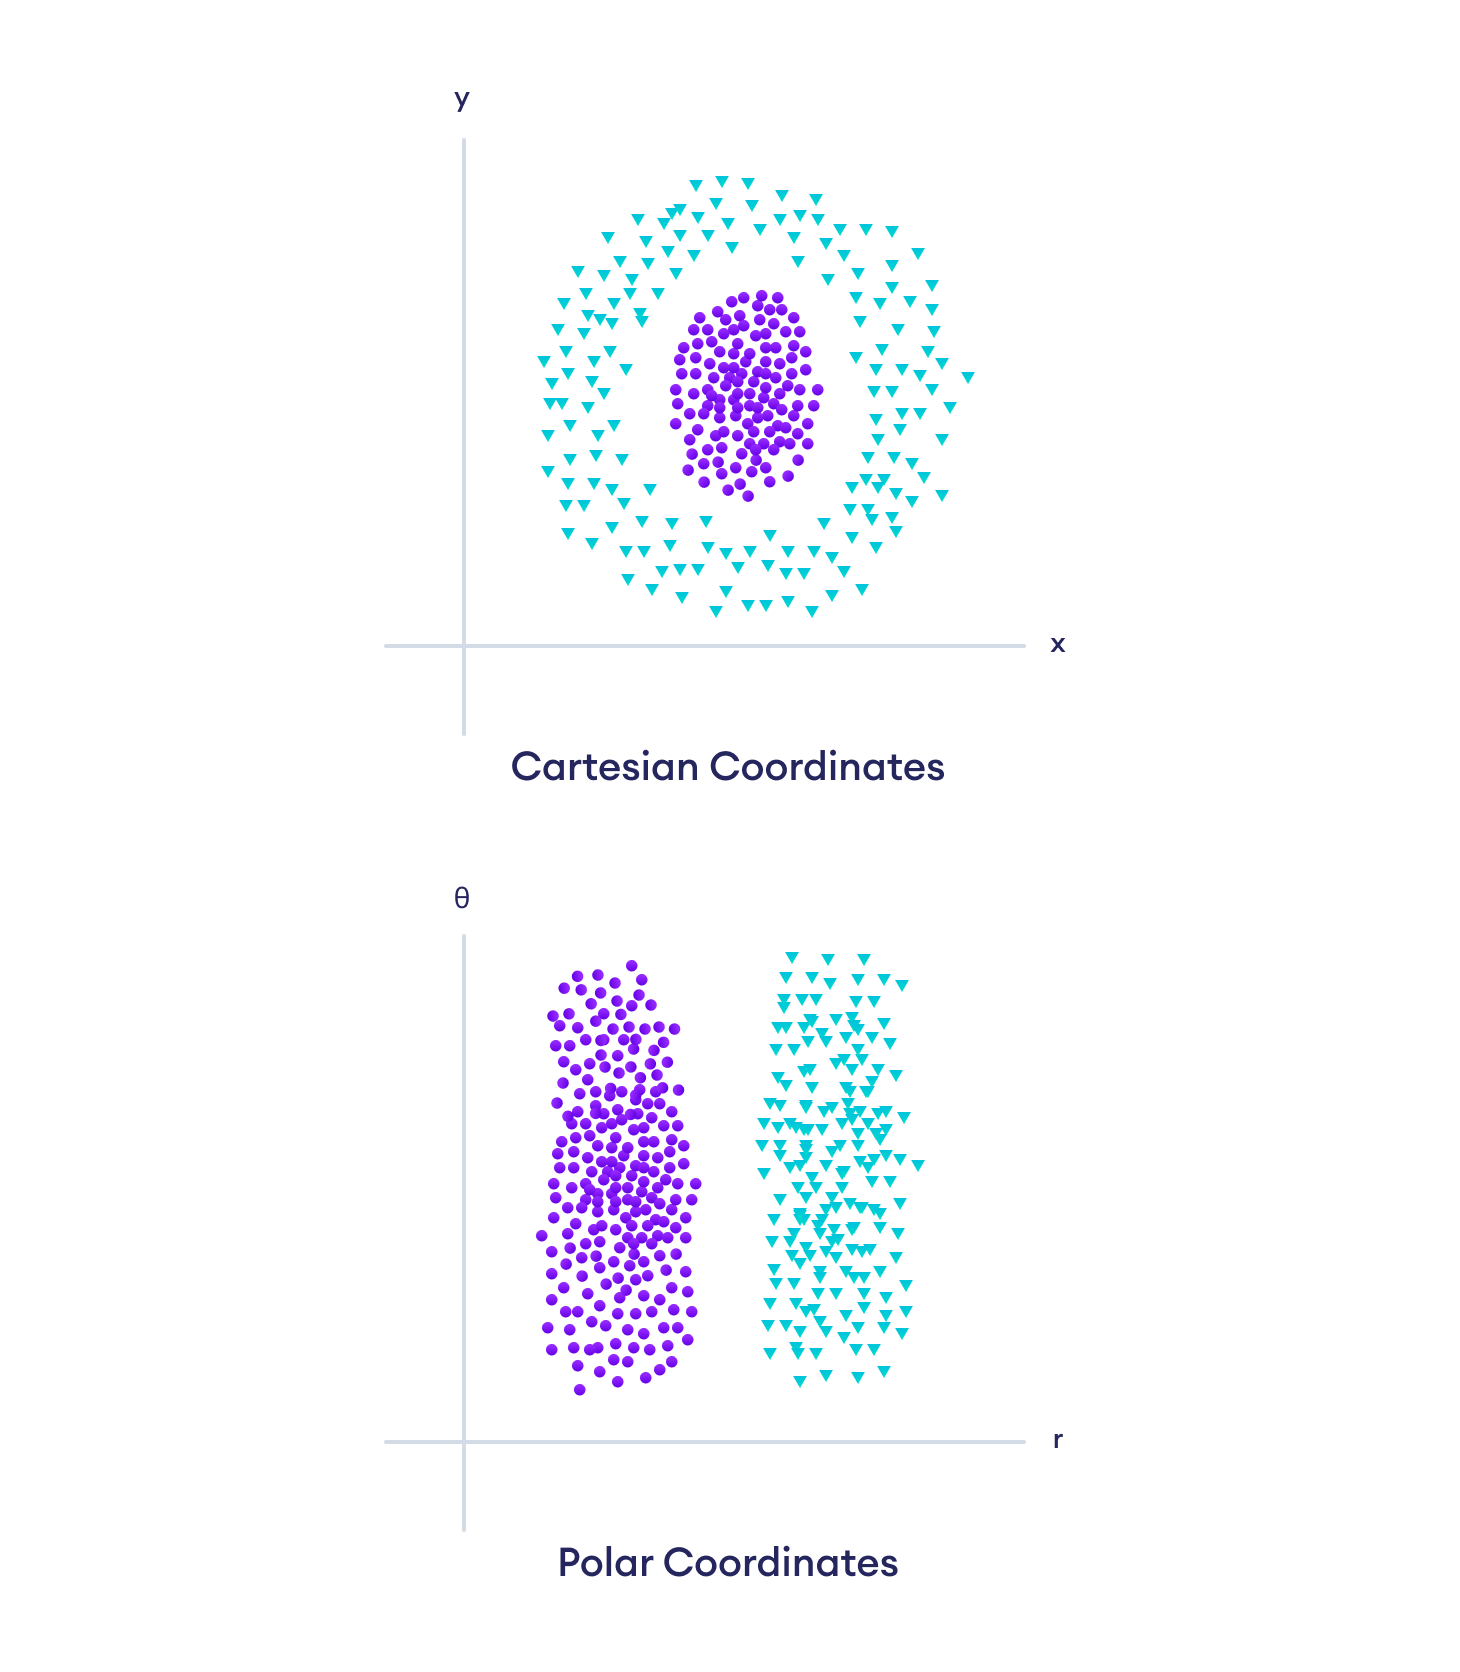 Representation of data in Cartesian vs Polar coordinates